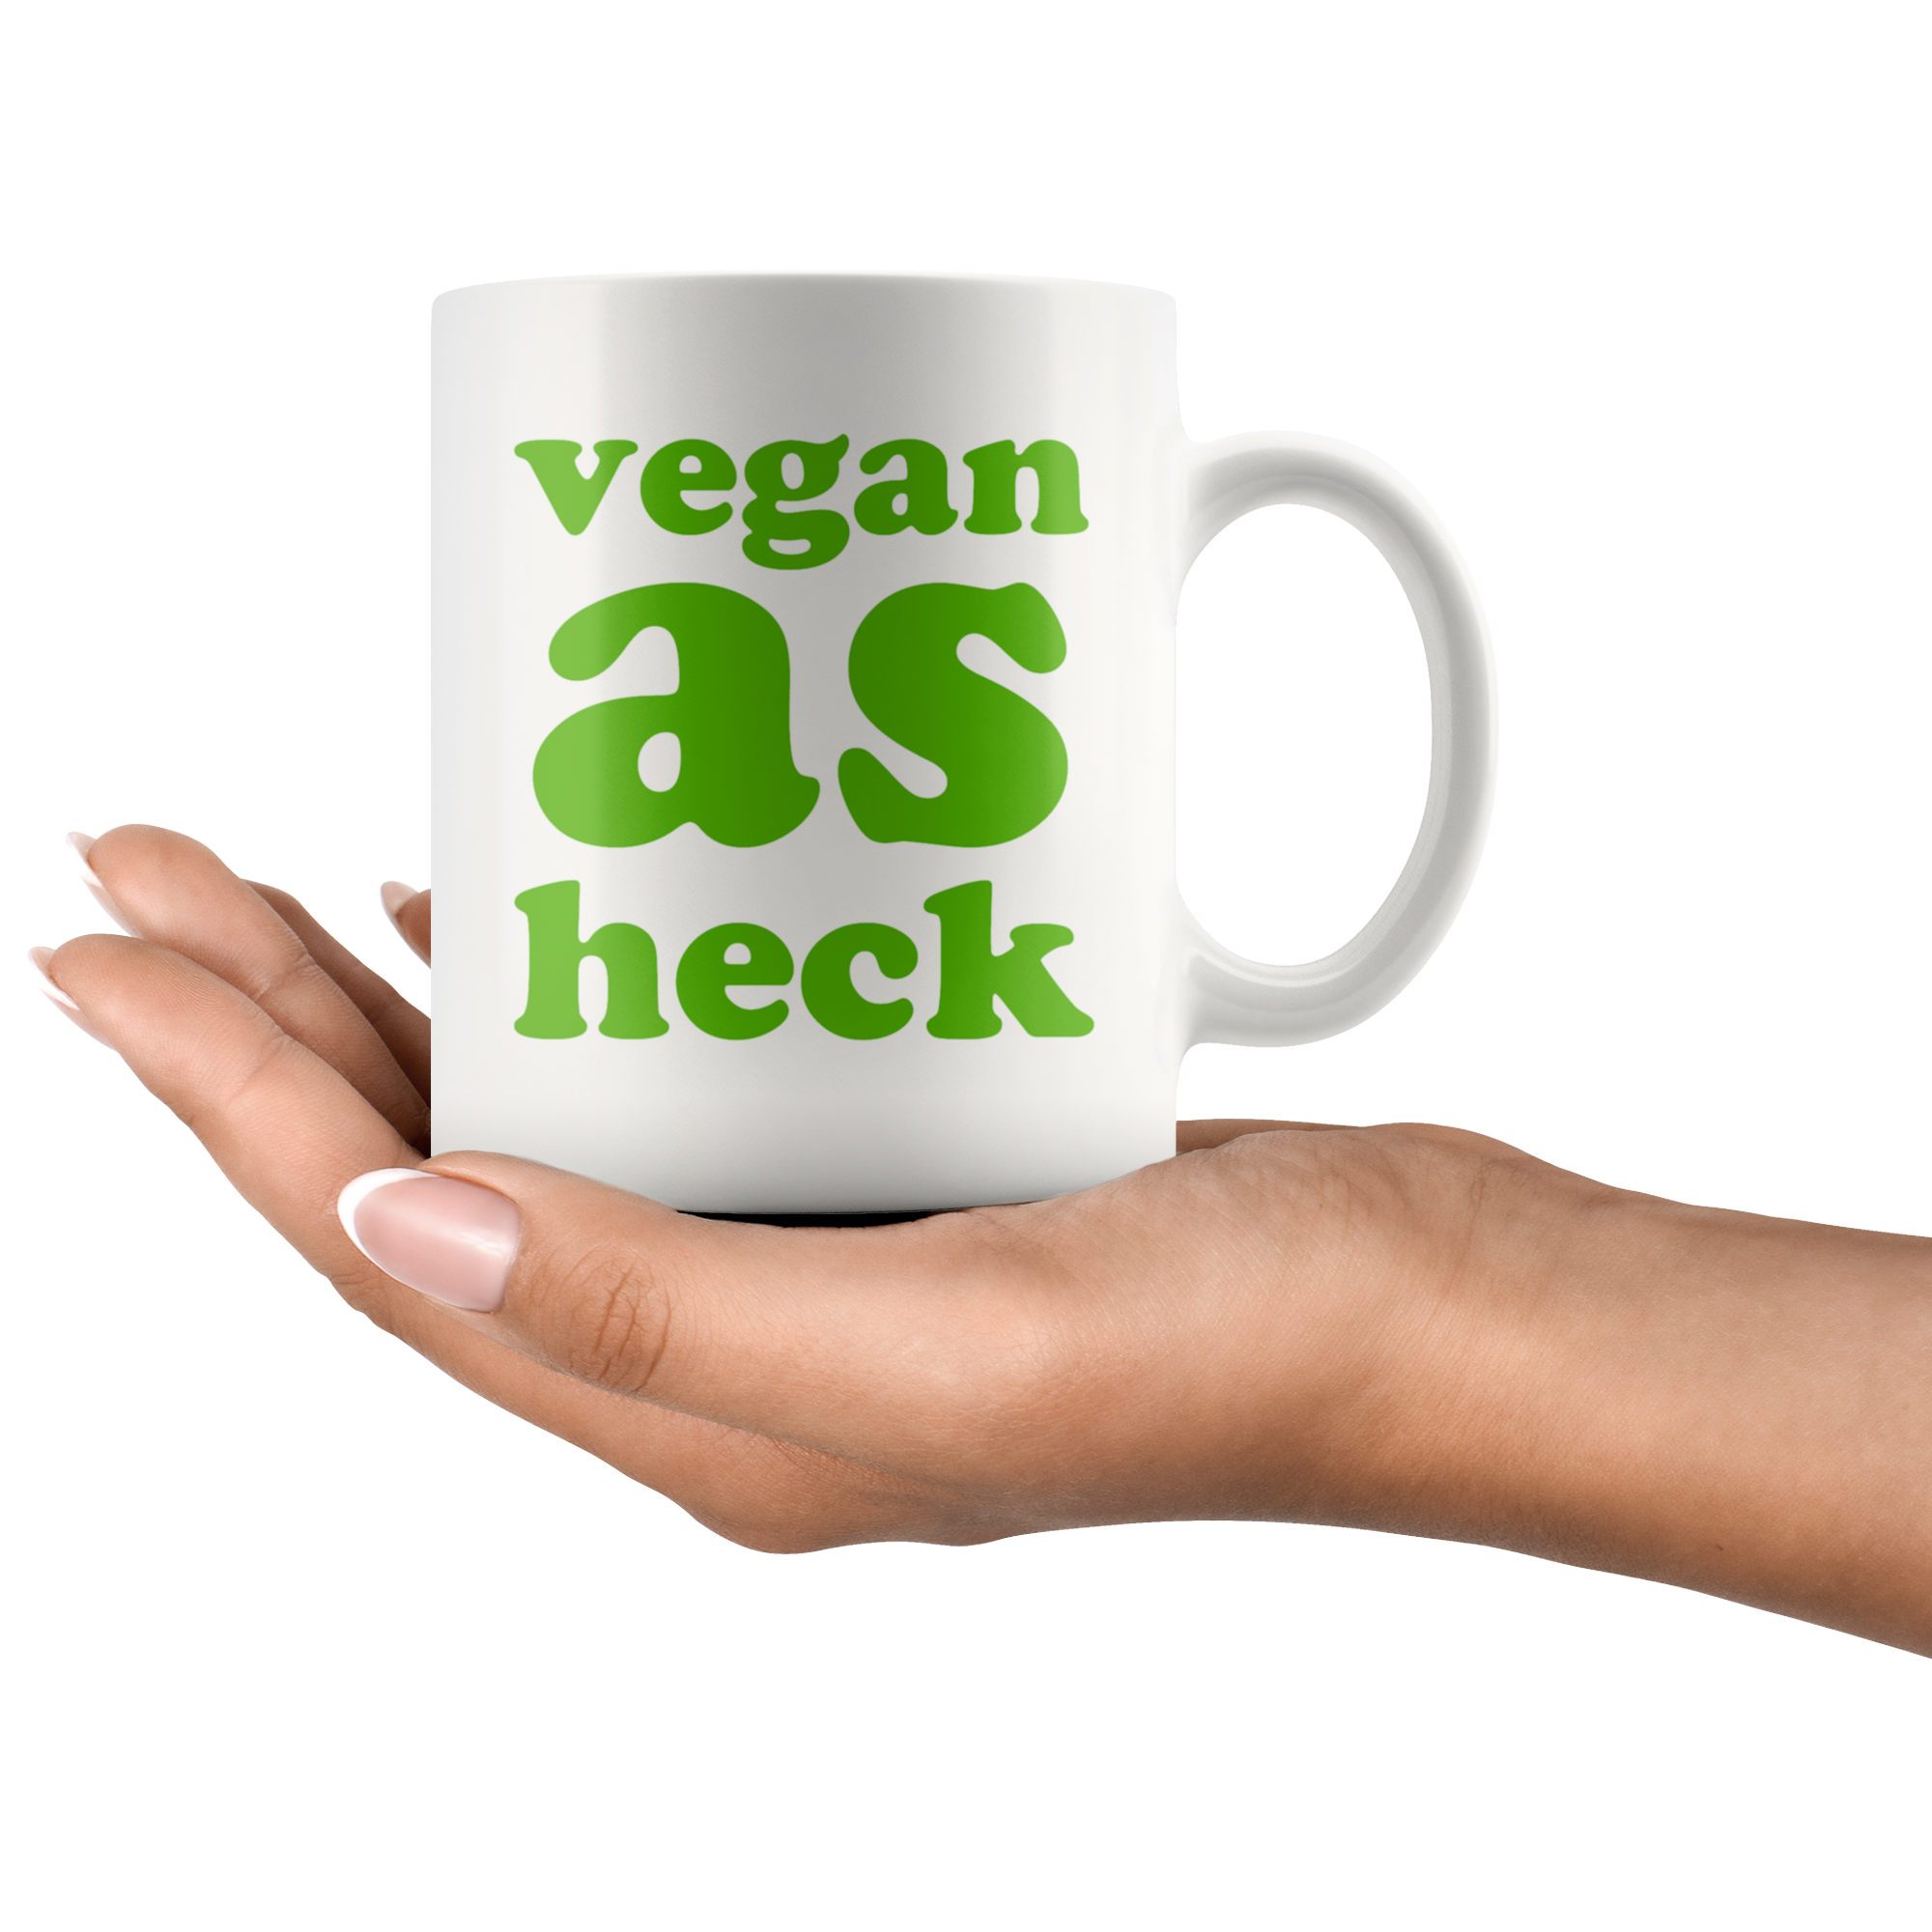 Vegan as heck mug - Guestbookery